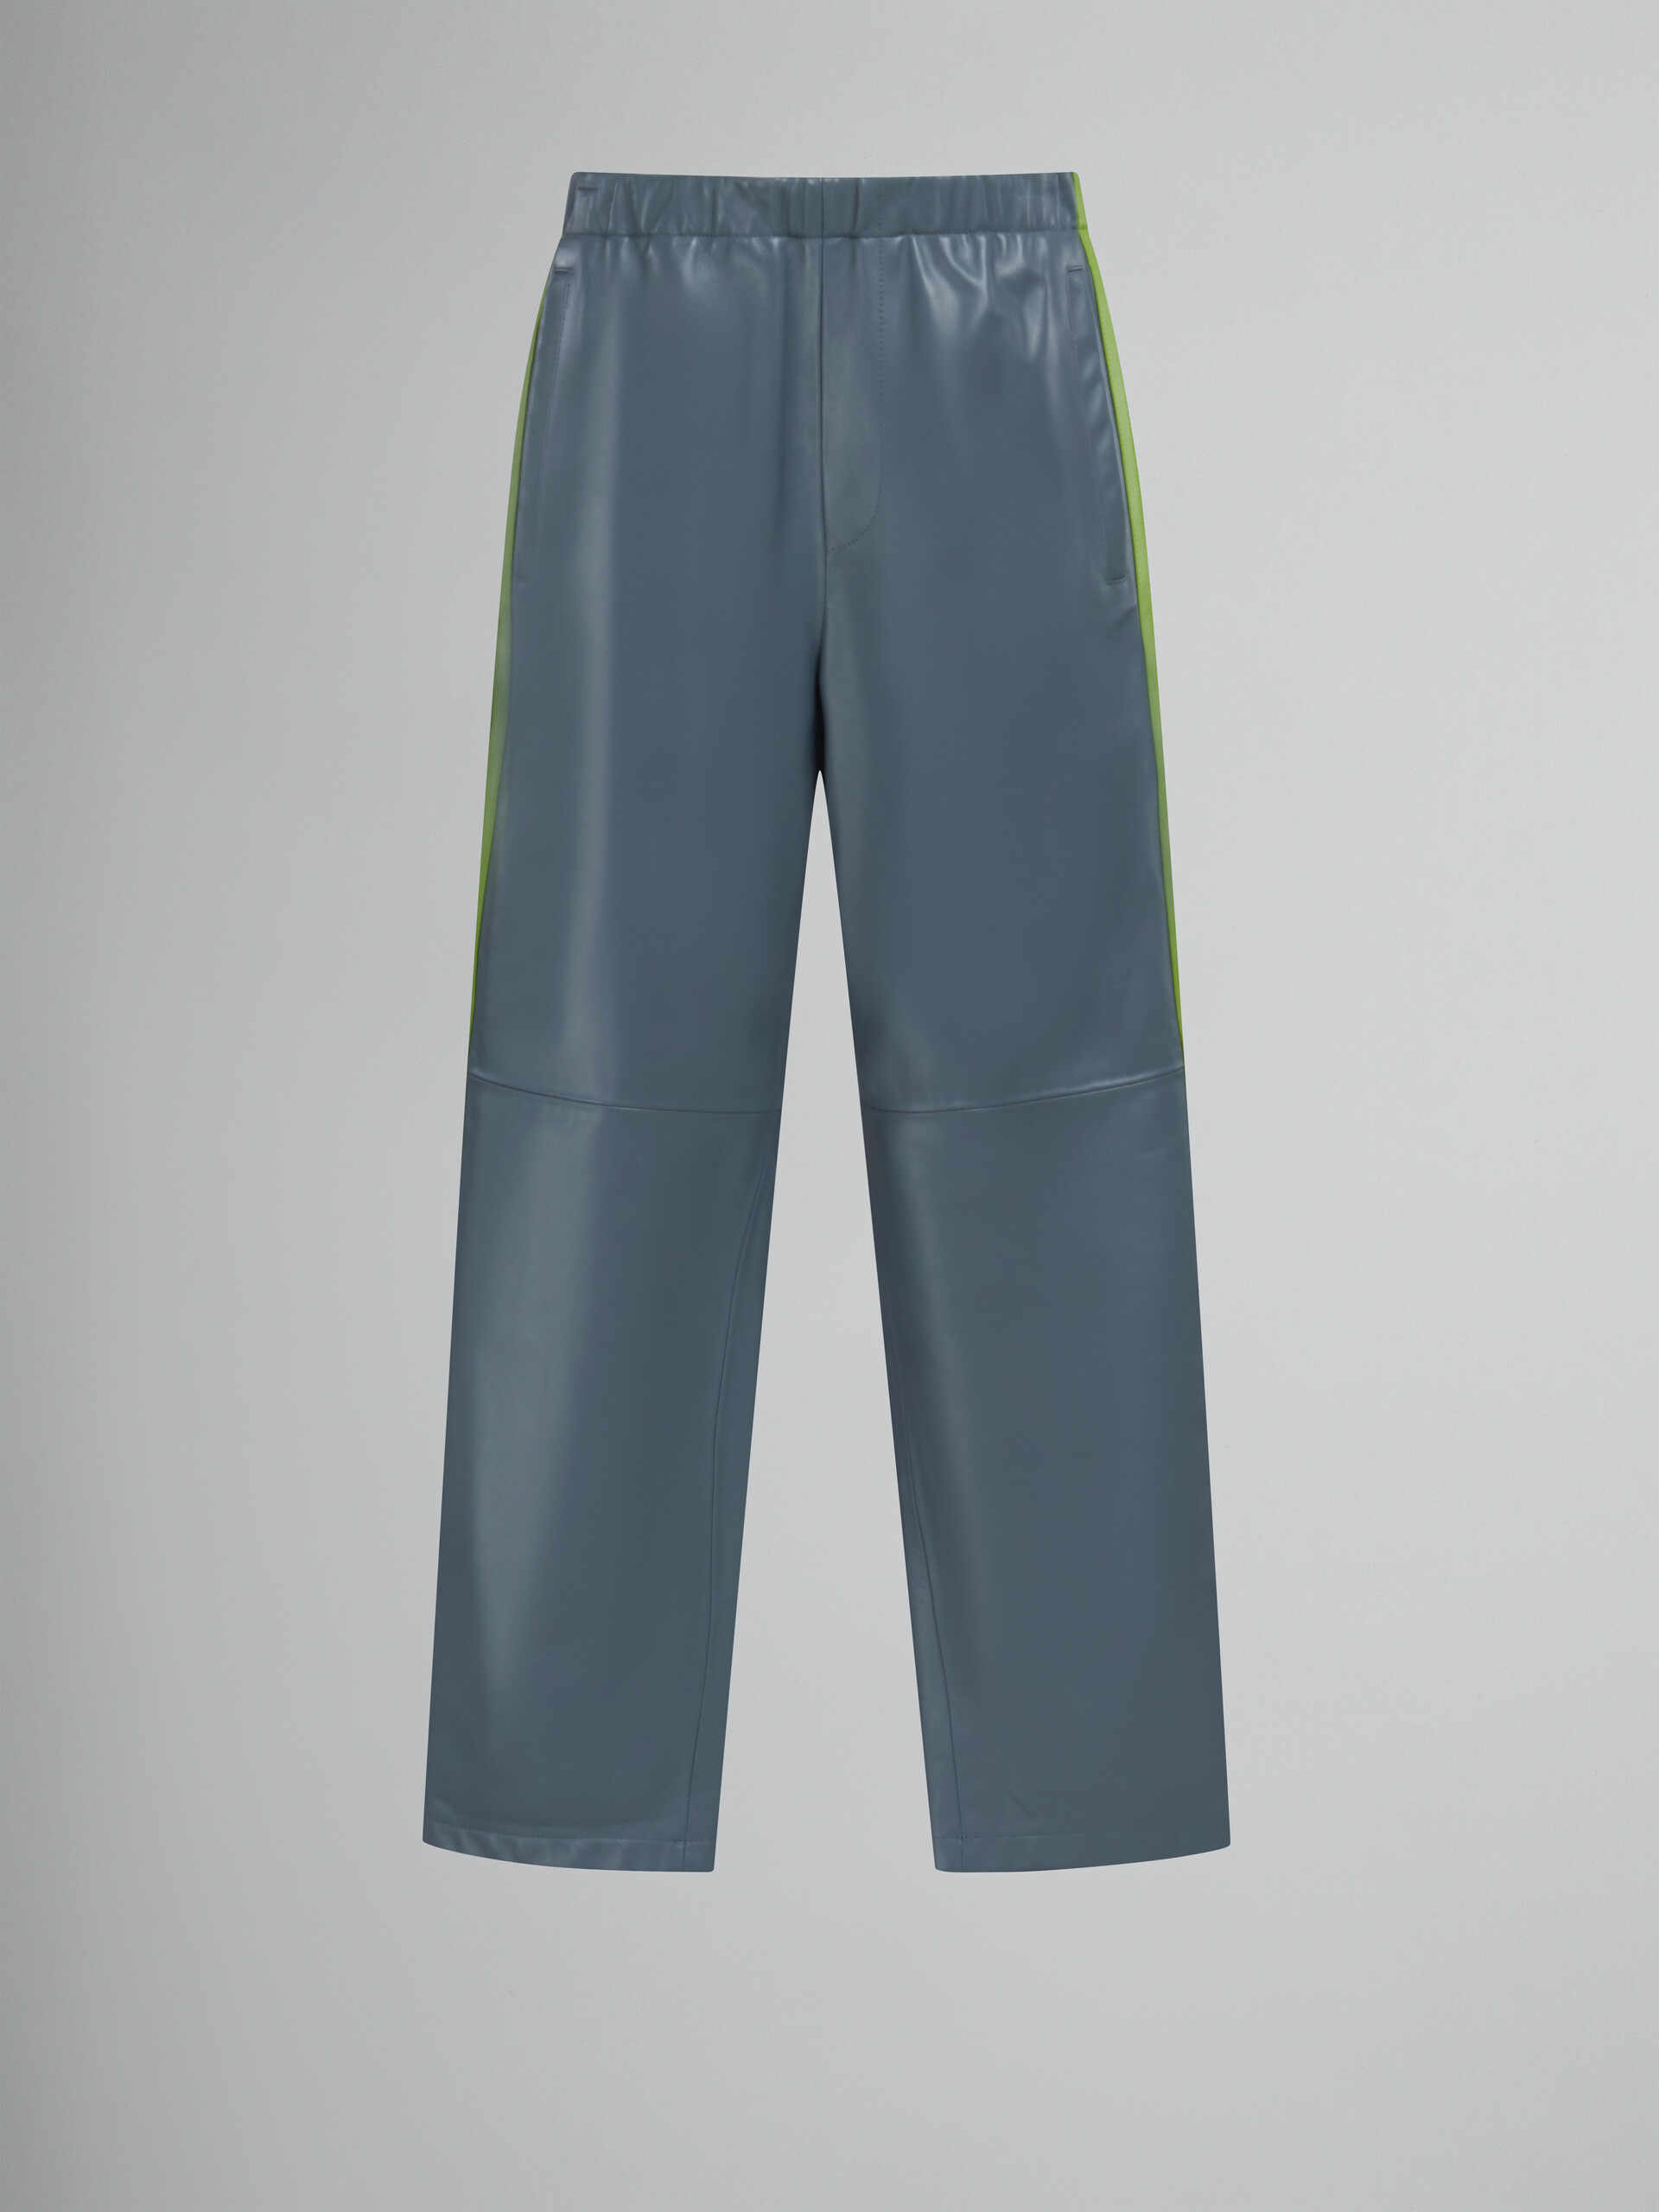 Pantaloni jogging in nappa blu petrolio - Pantaloni - Image 1